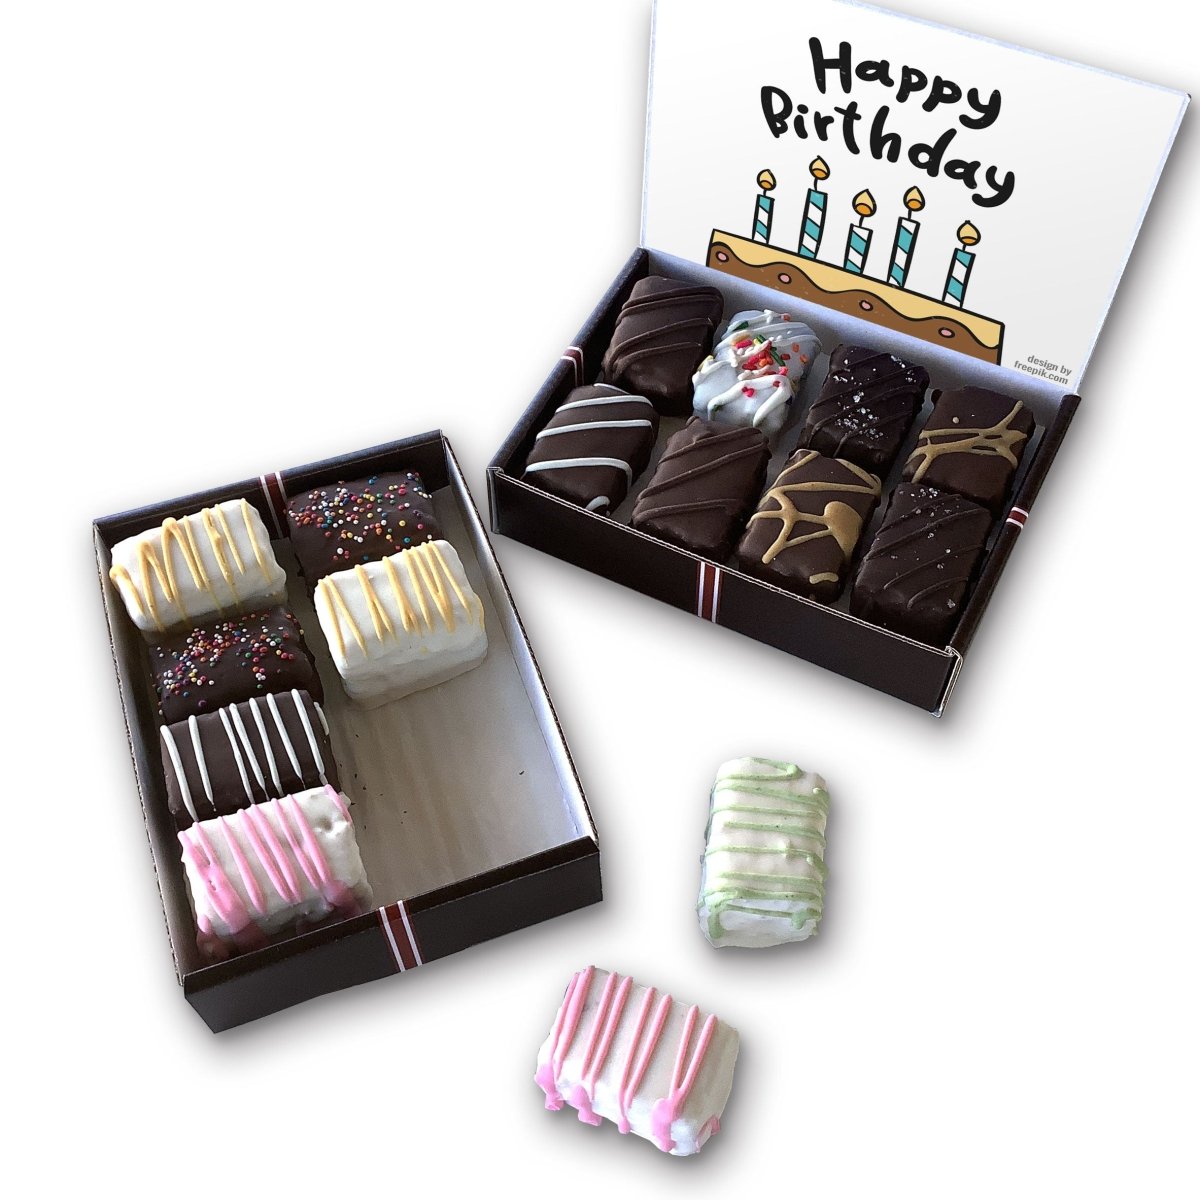 The Happy Birthday Brownie and Cake Combo 16 - Nettie's Craft Brownies